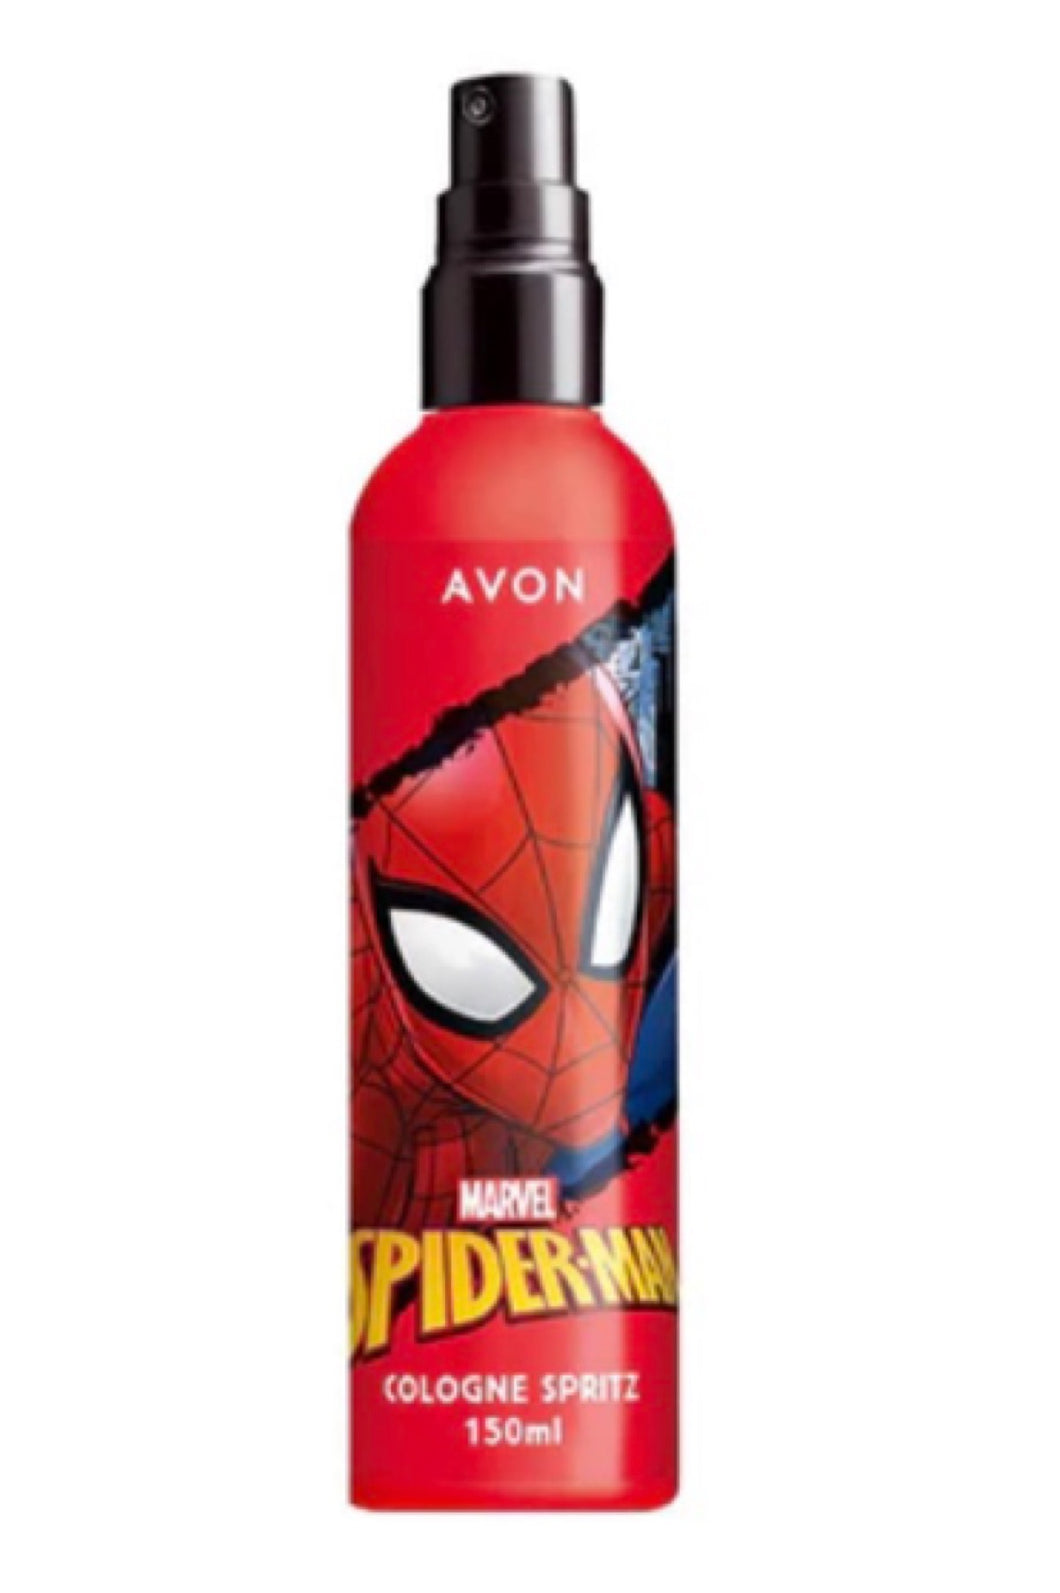 Marvel Spider Man Cologne Spritz 150ml